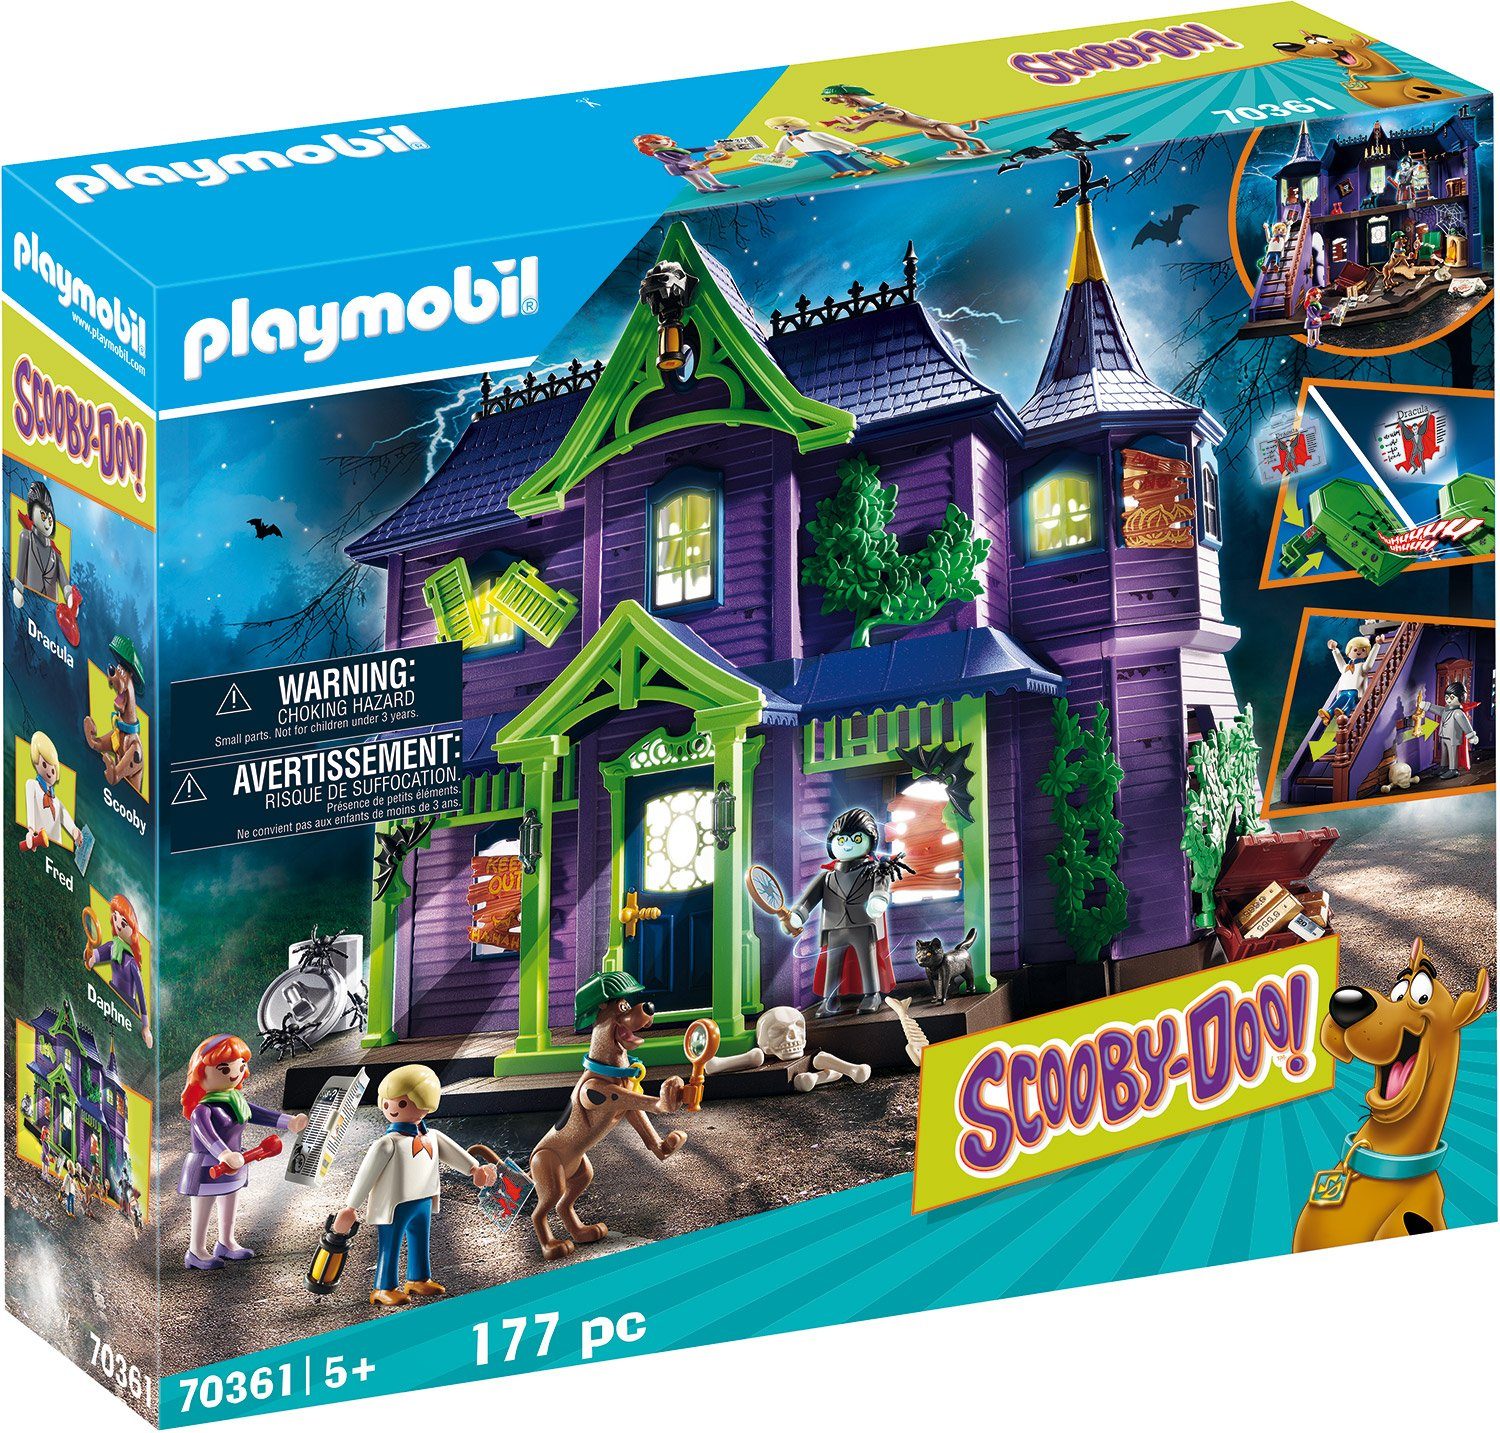 Playmobil® Konstruktions-Spielset »Abenteuer im Geisterhaus (70361),  SCOOBY-DOO!«, (177 St), Made in Germany online kaufen | OTTO